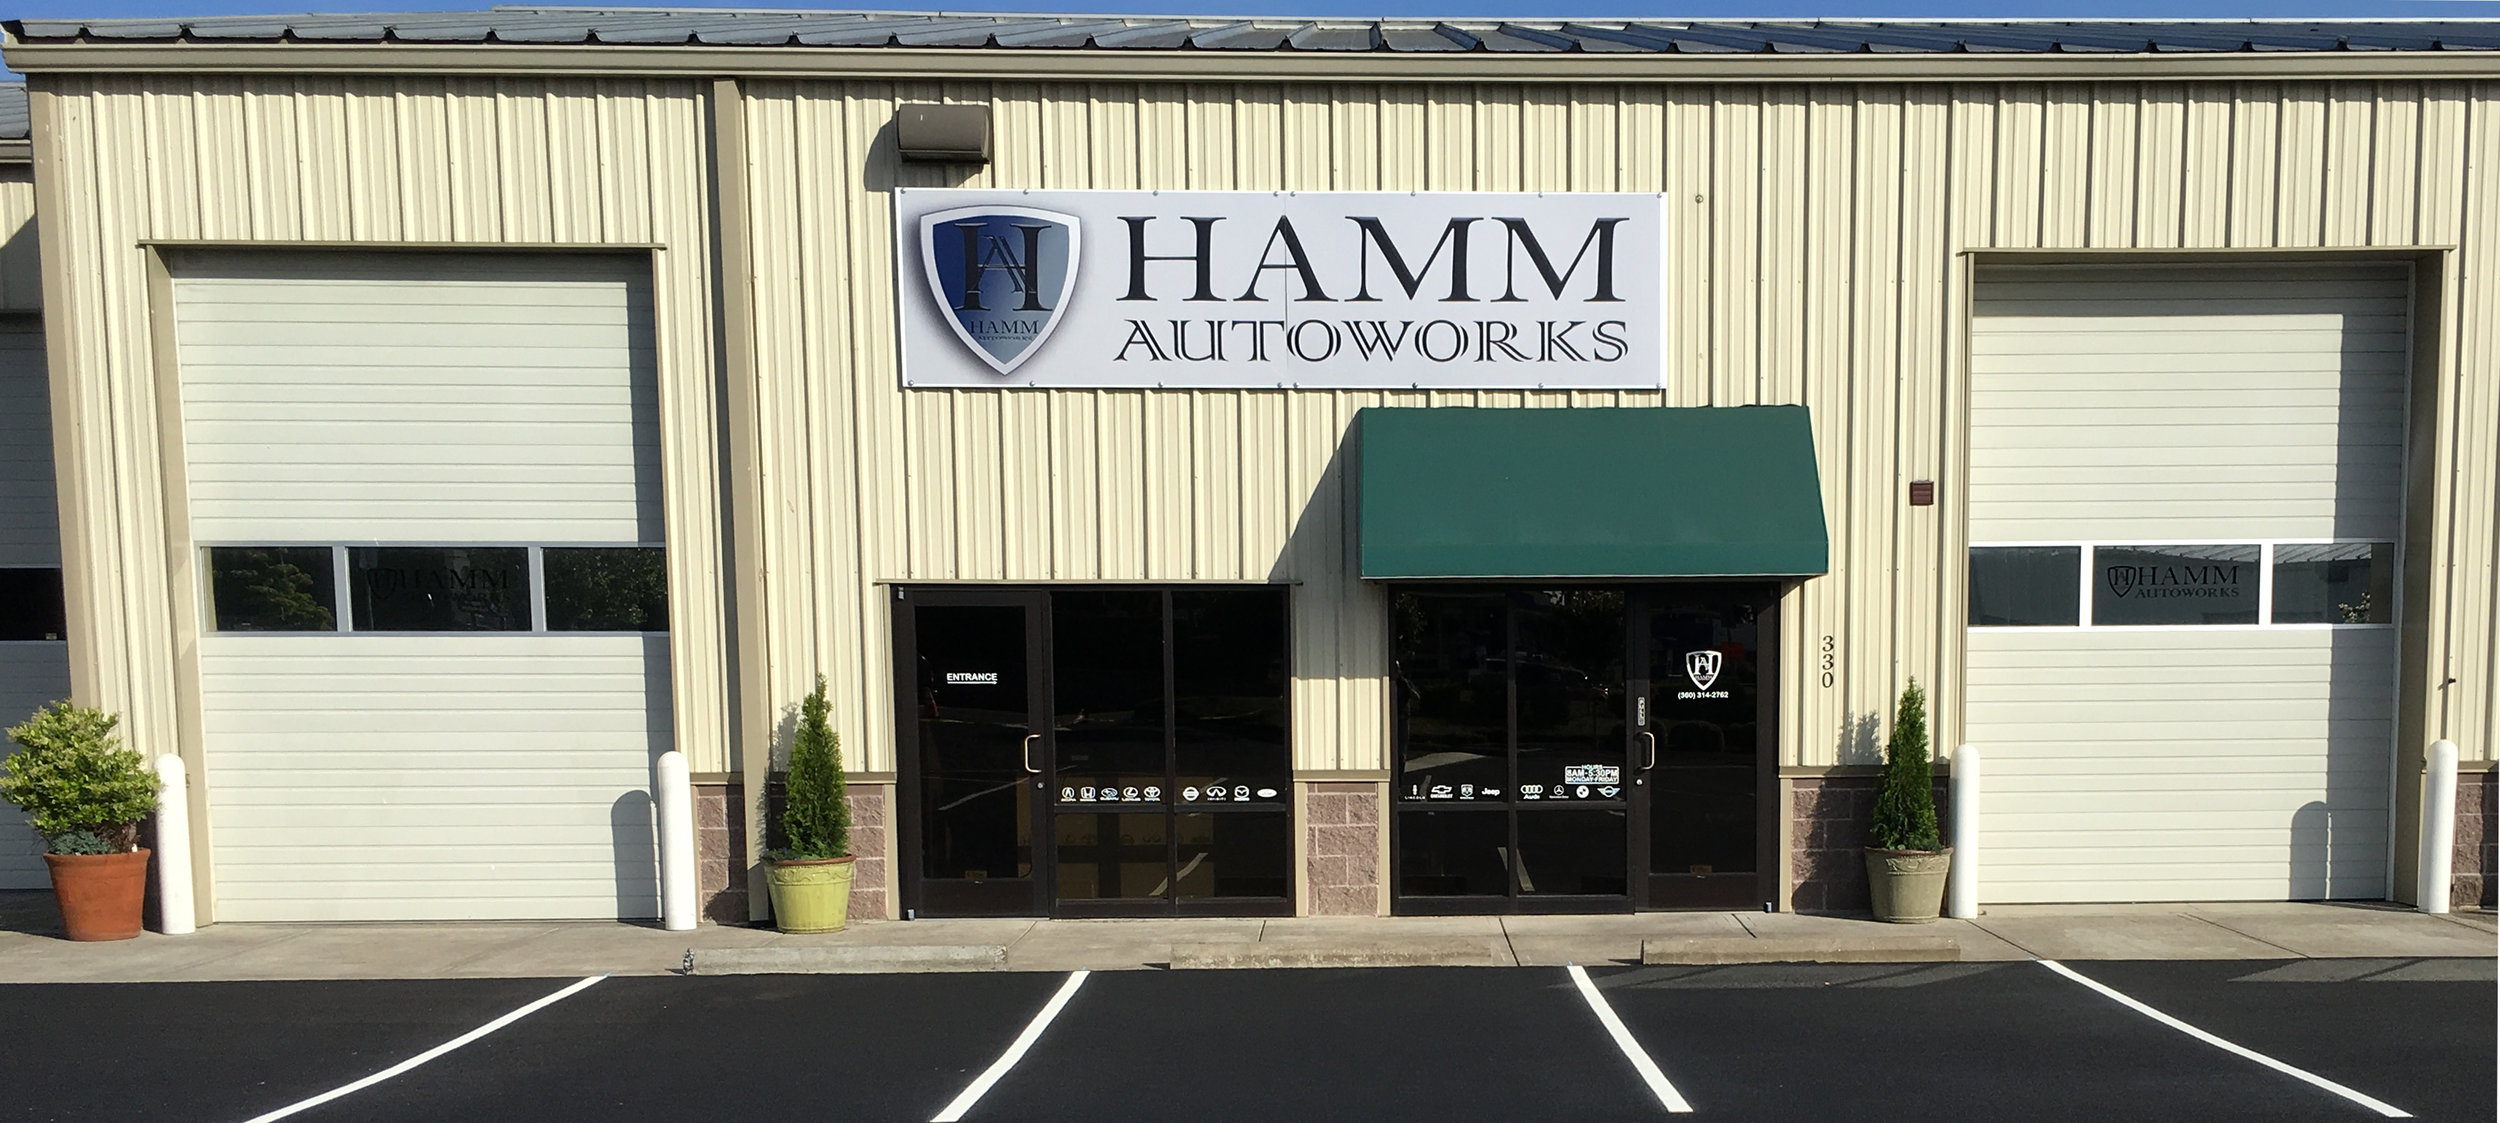 Hamm Autoworks Store Front.jpg